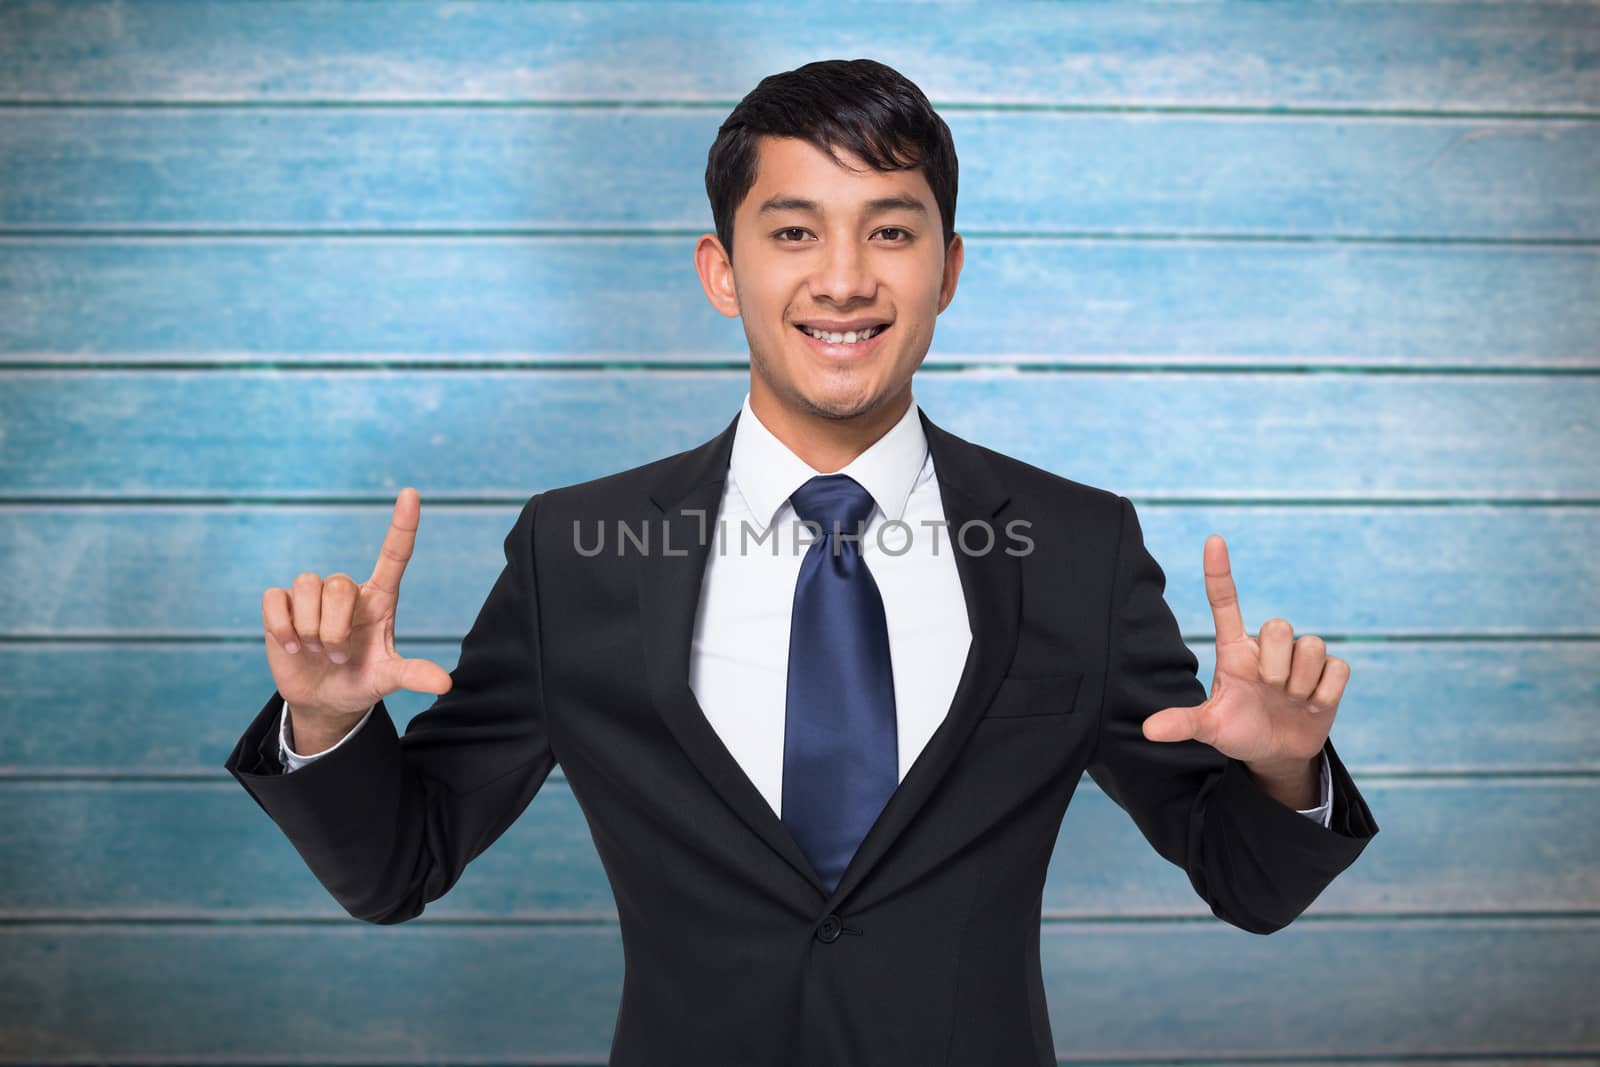 Smiling businessman holding against wooden planks